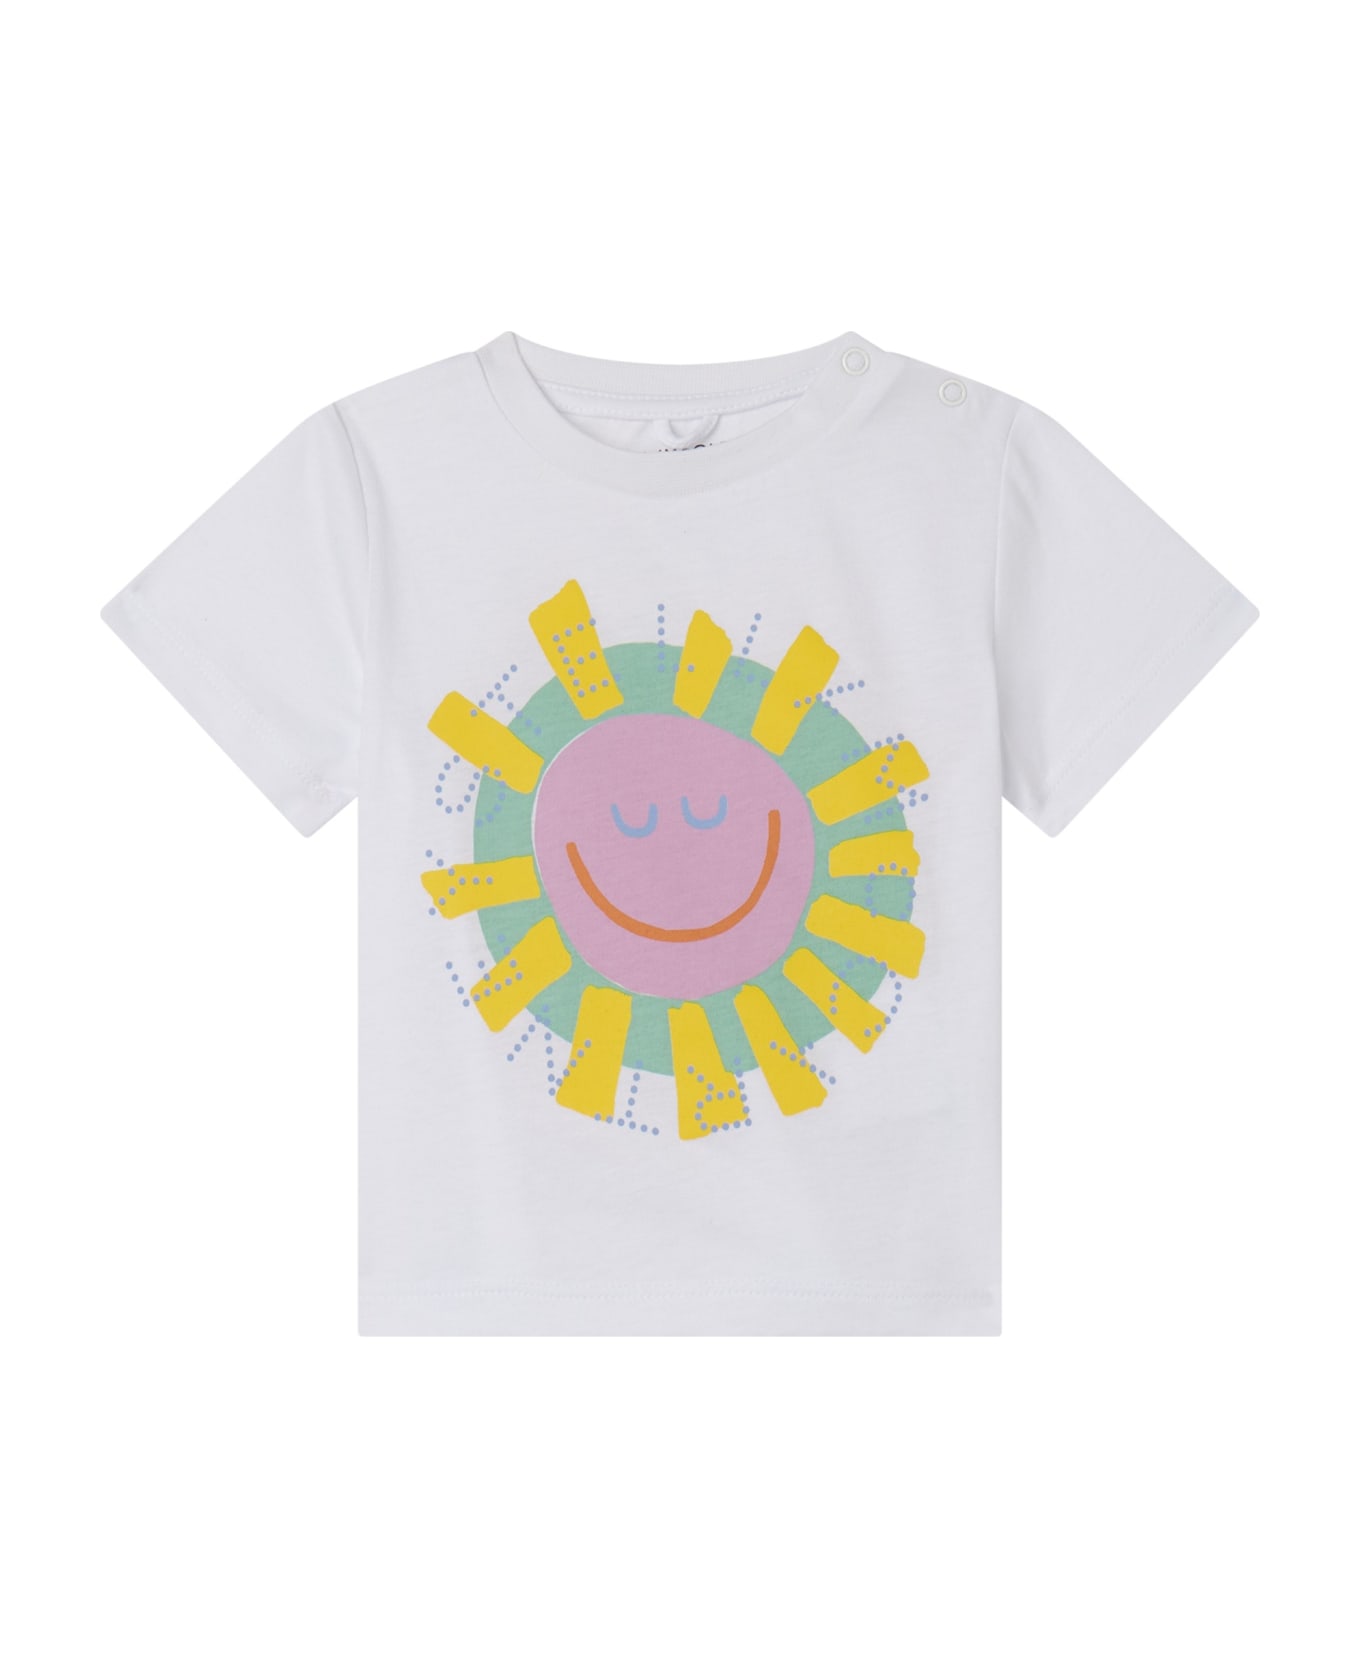 Stella McCartney Kids T-shirt With Graphic Print - White